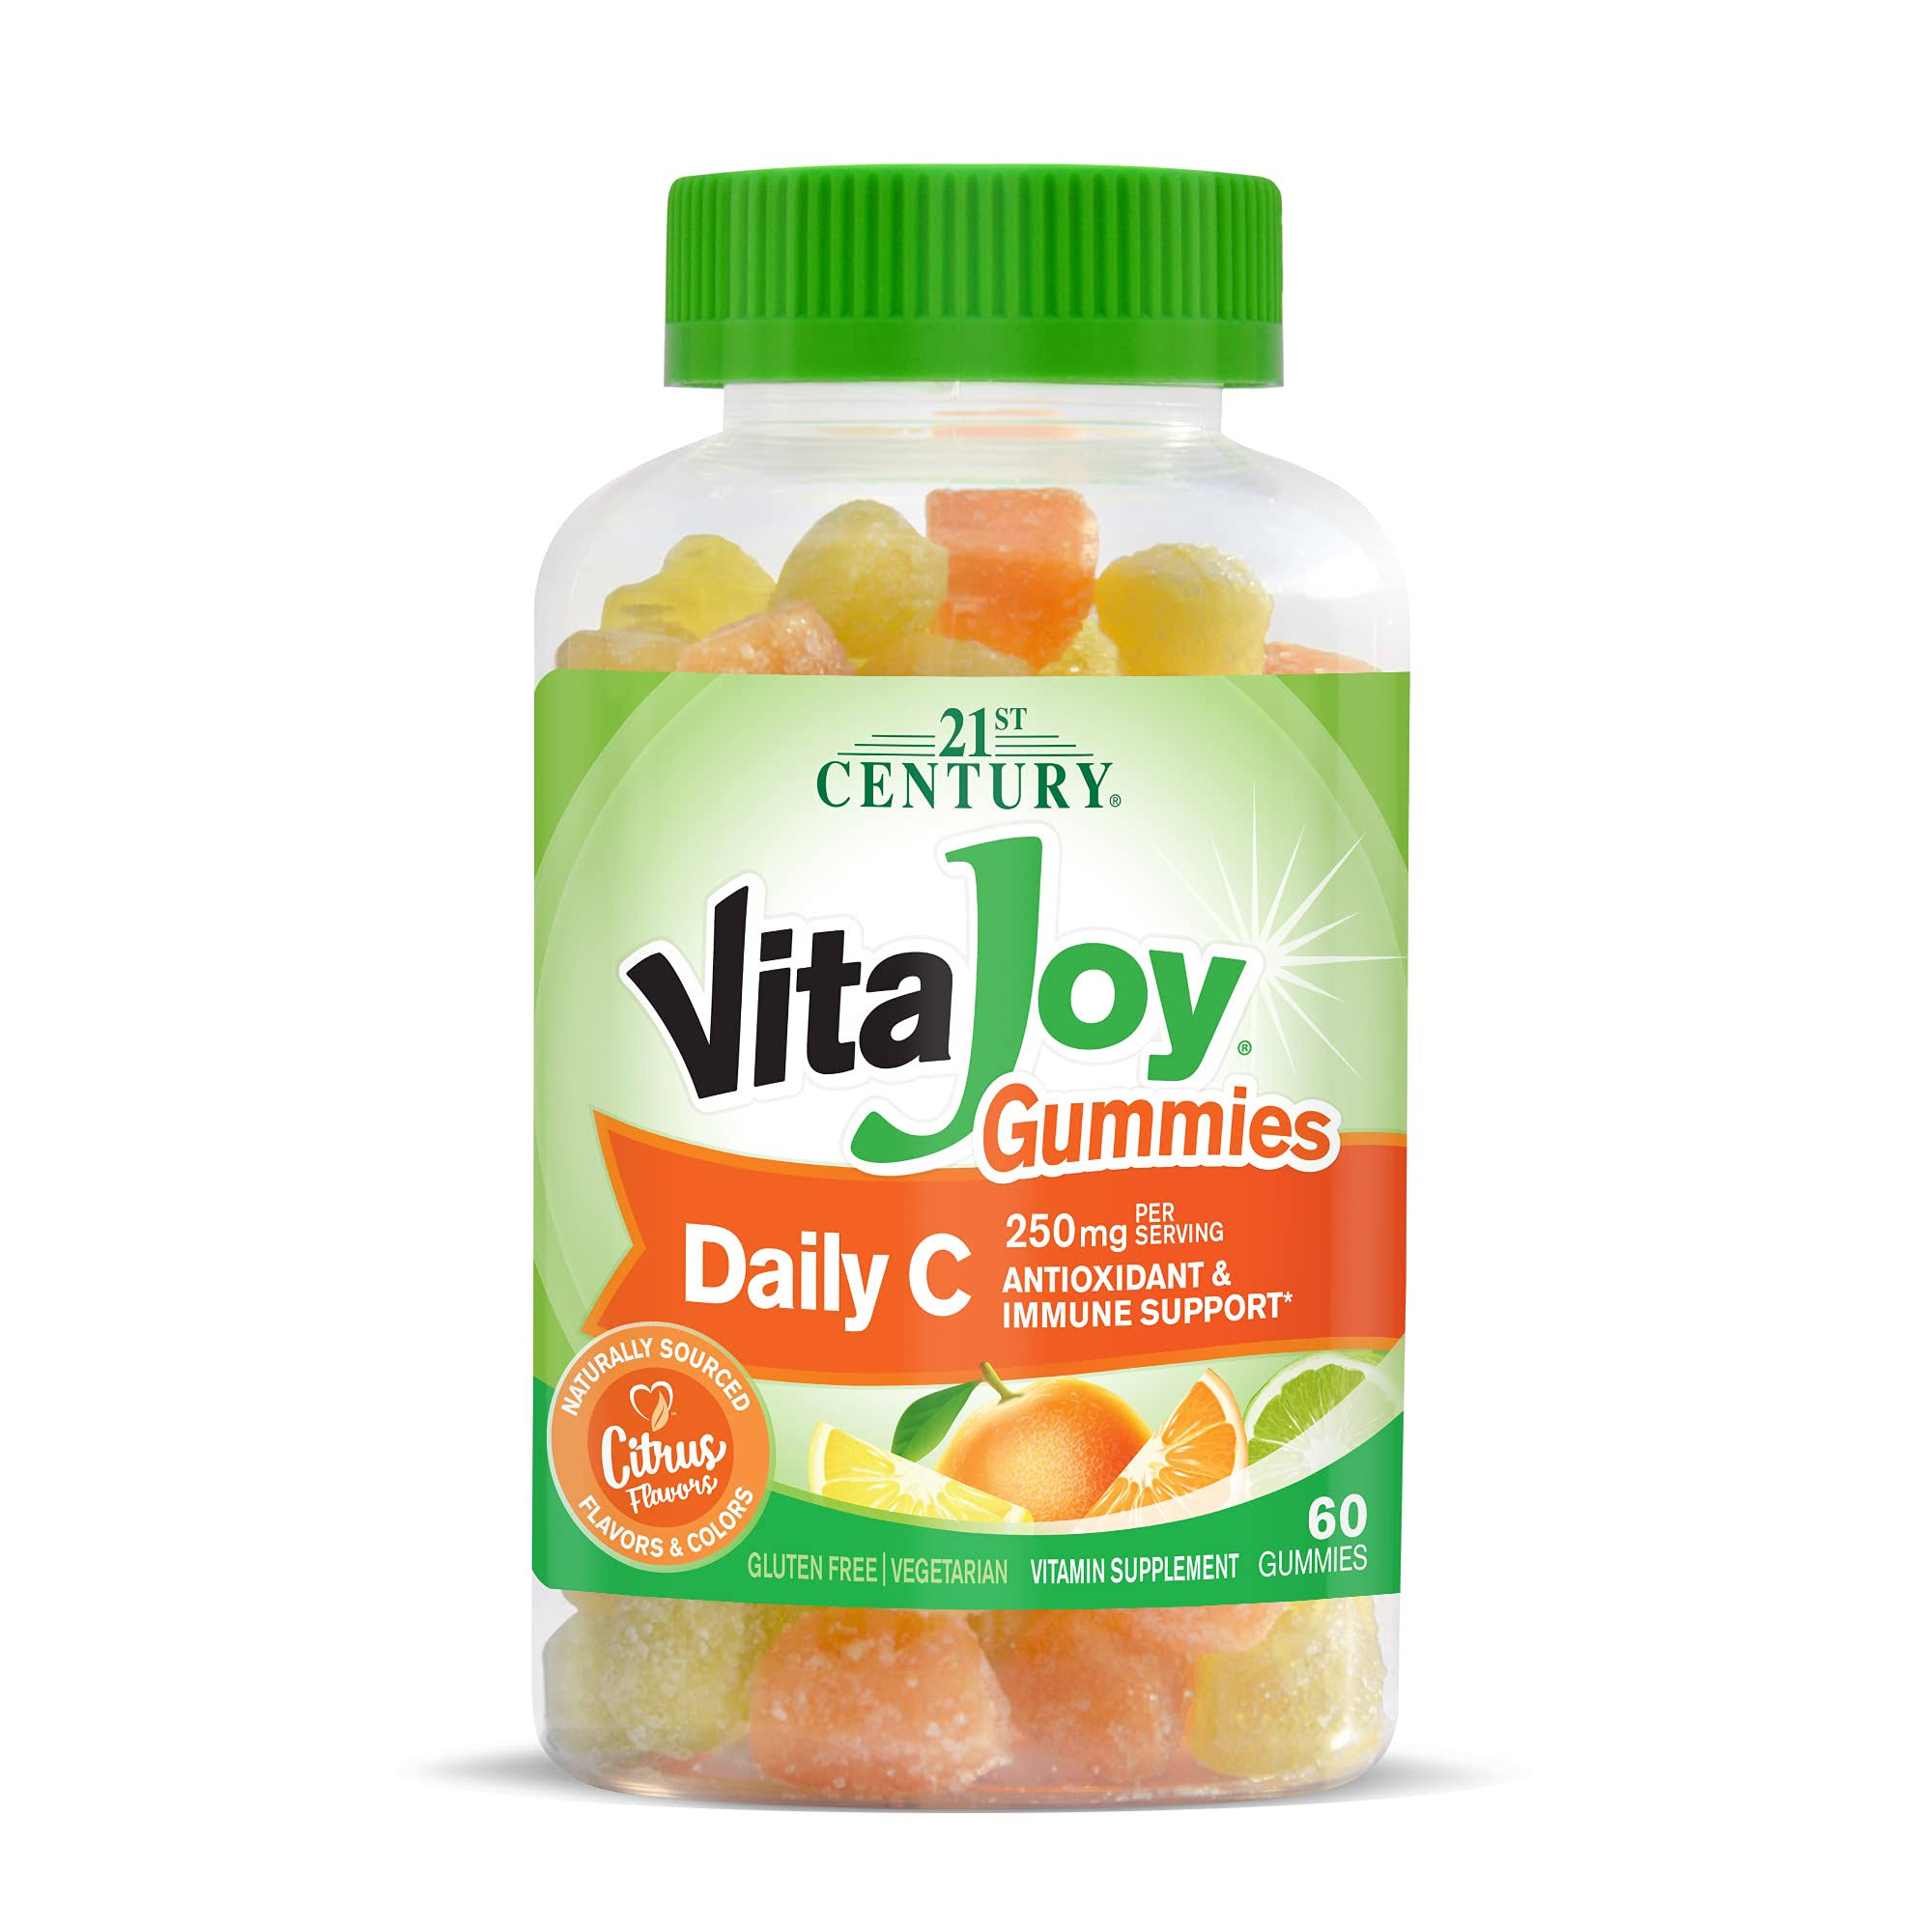 VitaJoy Daily C 60 Gummies 250 mg by 21st Century